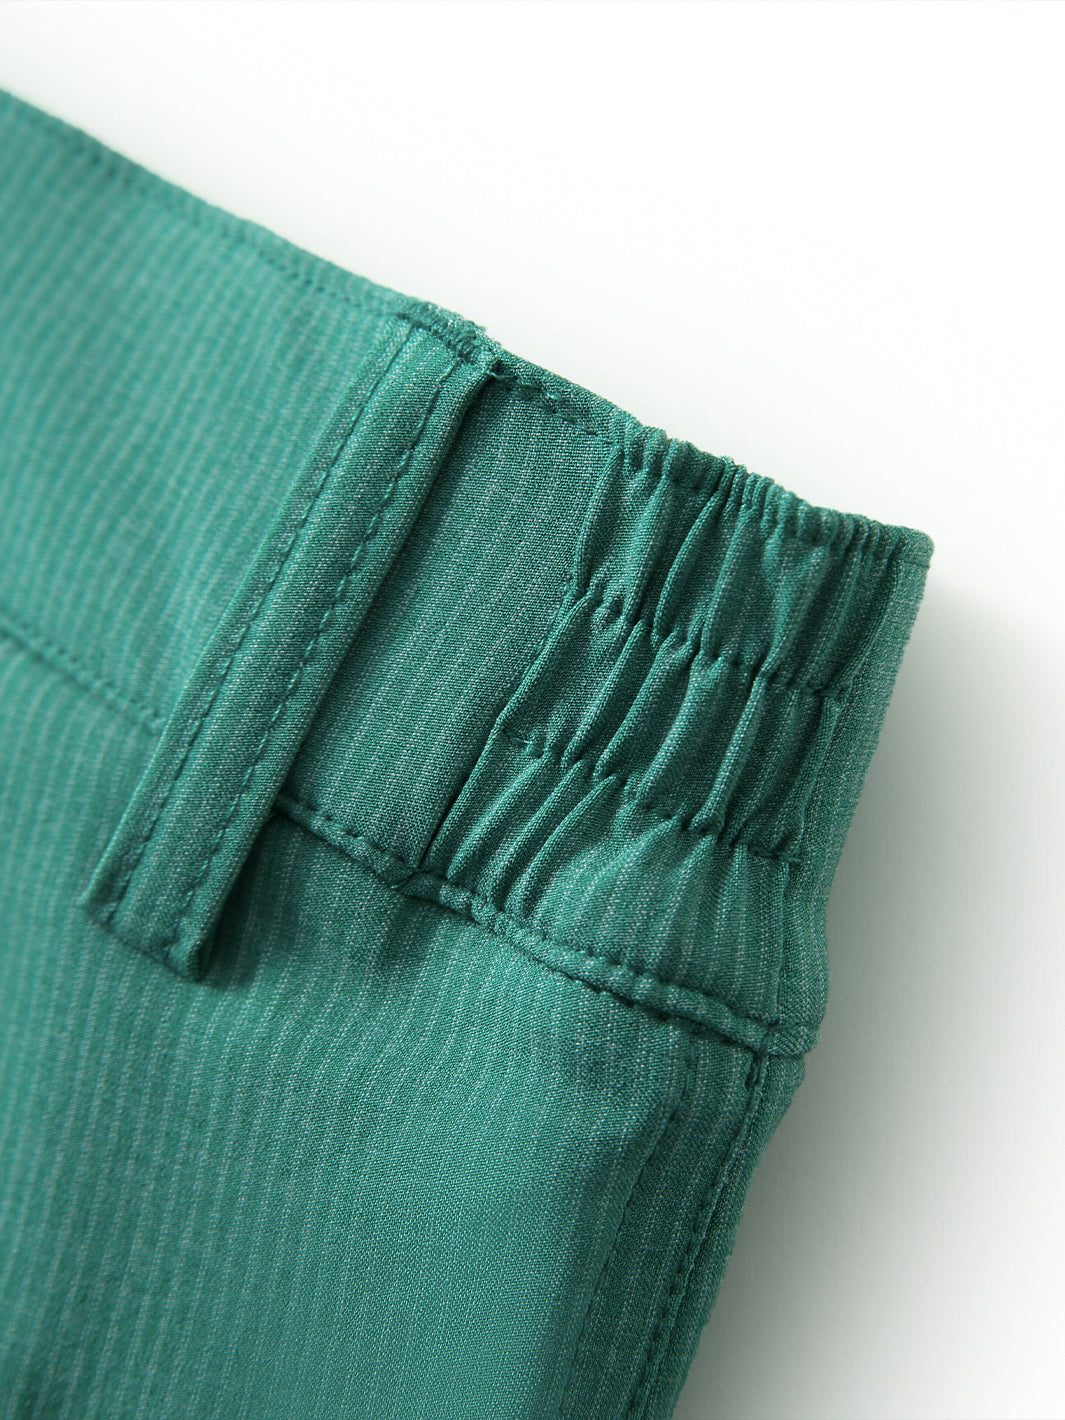 10" Inseam Striped Golf Shorts-Sea Green